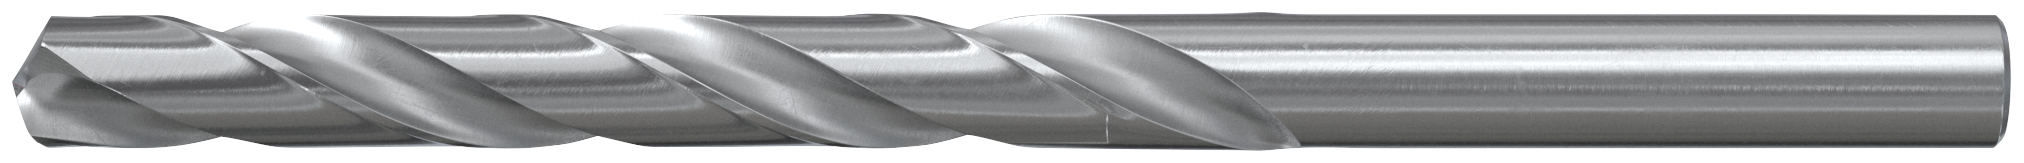 fischer Set di 25 punte trapano per metallo HSS-G (1-13mm) in acciaio (25 Pz.) Set di punte professionaliper metallo in acciaio HSS-G fie2881